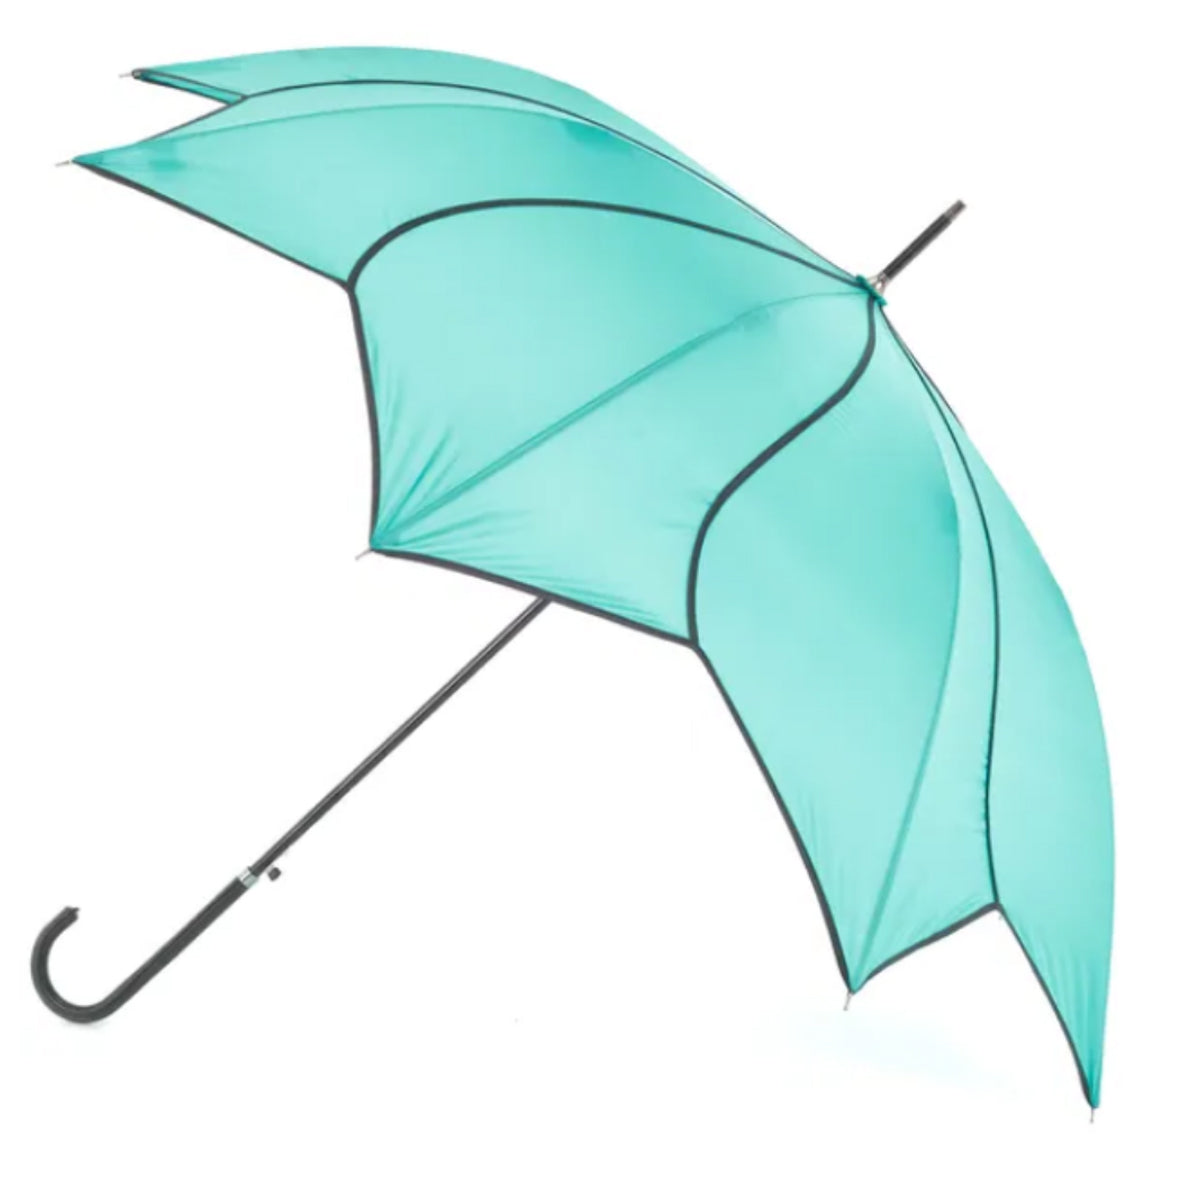 Teal Swirl Umbrella